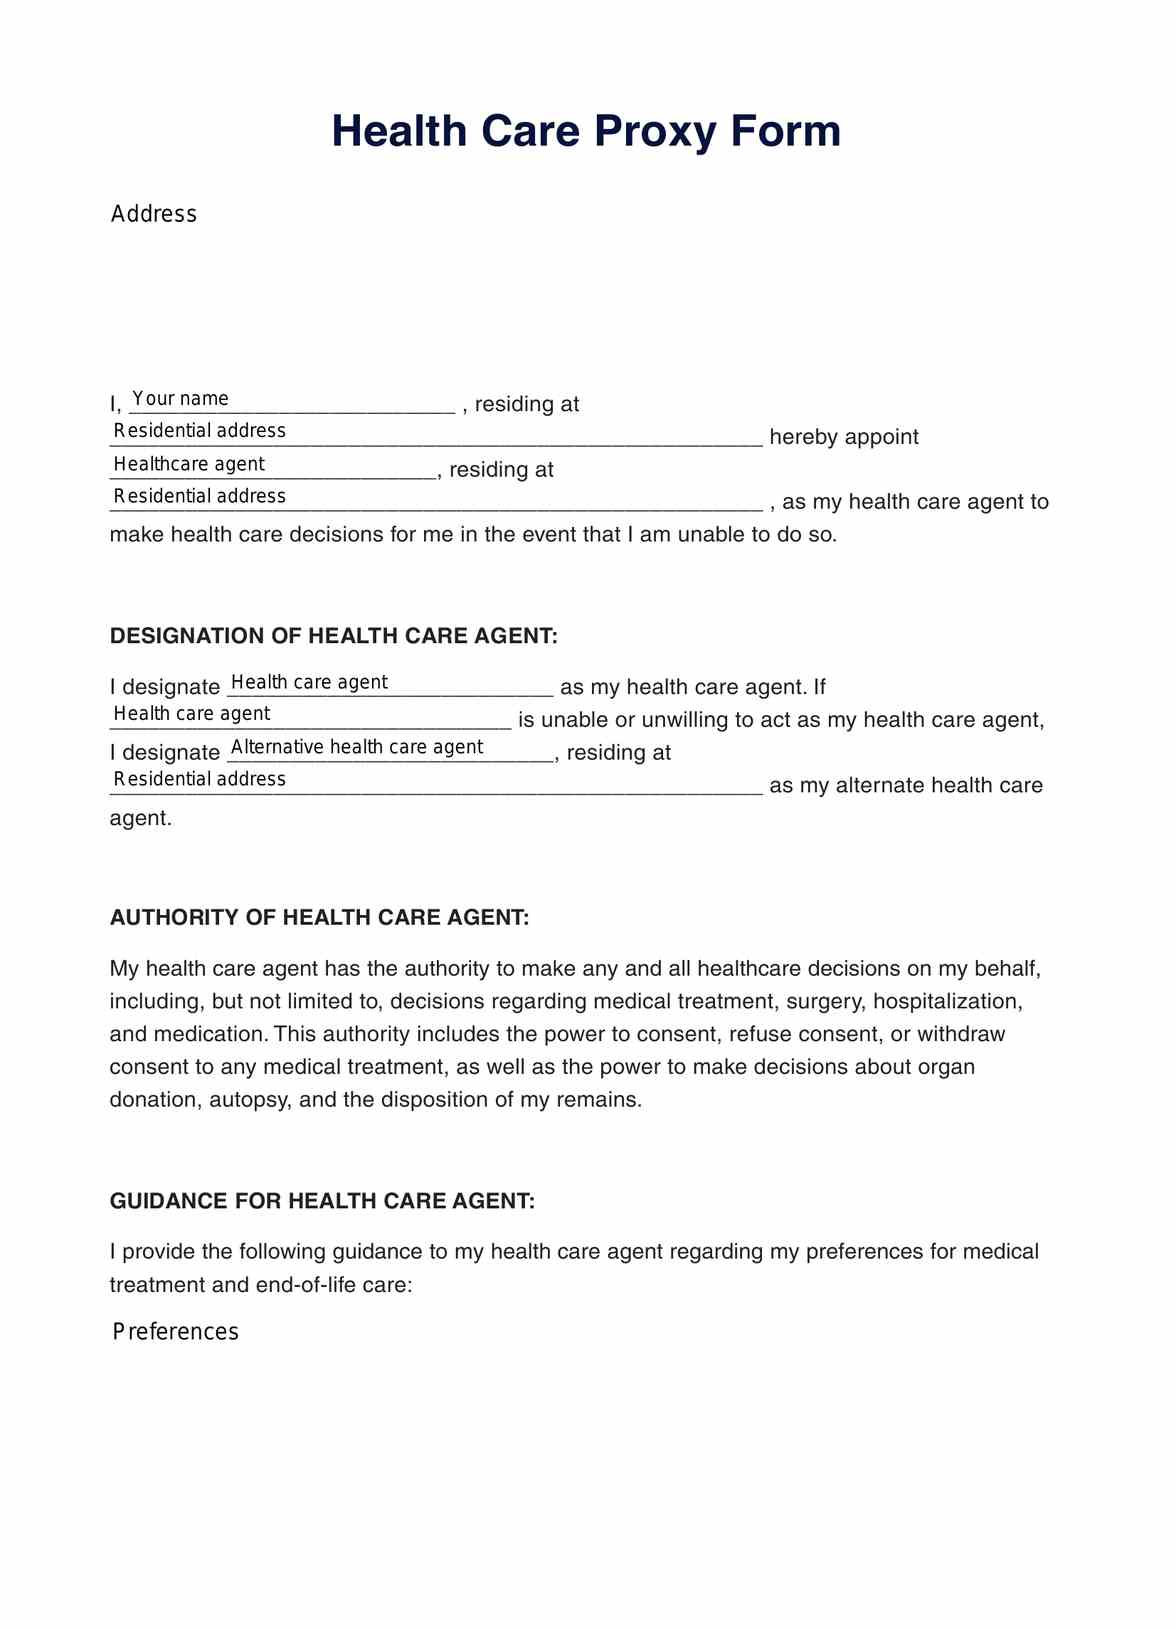 Health Care Proxy Form PDF Example